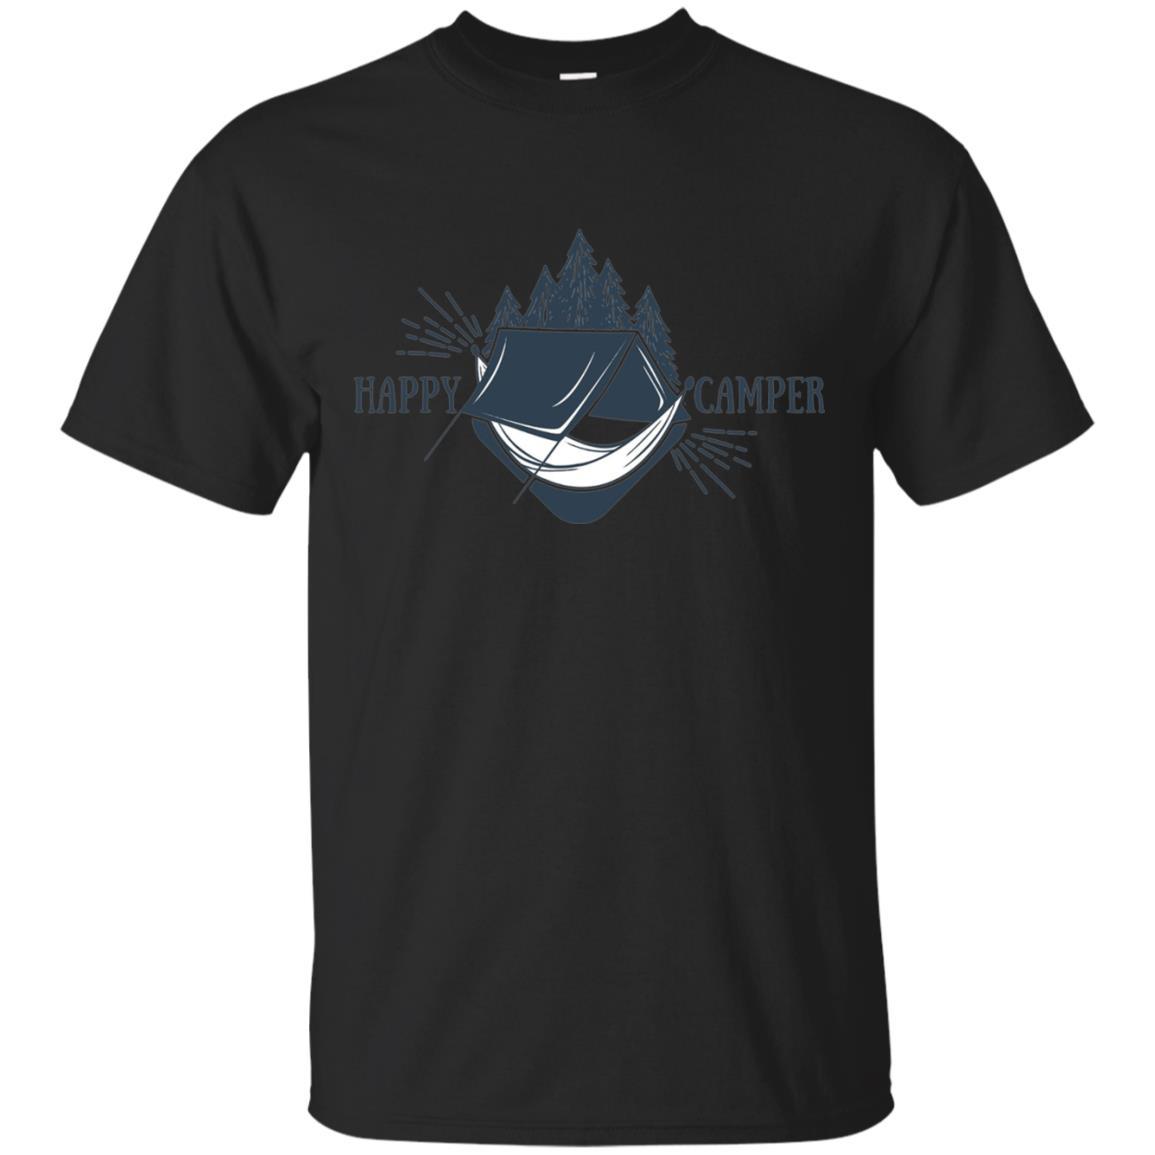 S Happy Camper Hammock T-shirt - Hammock Camping Tee